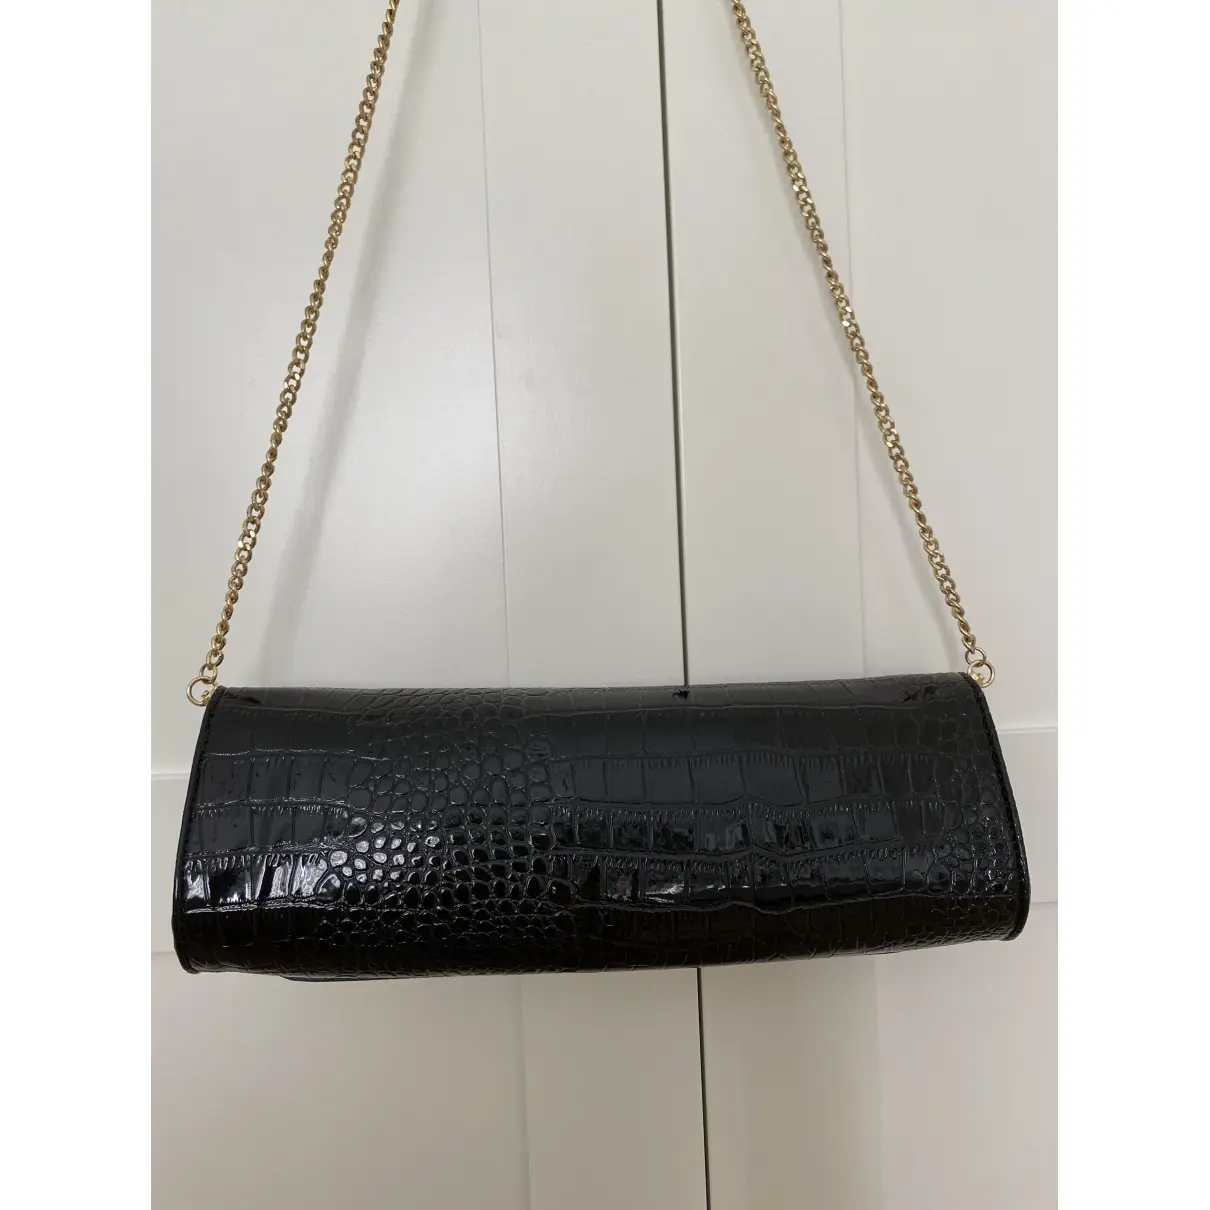 Buy Vivienne Westwood Patent leather handbag online - Vintage